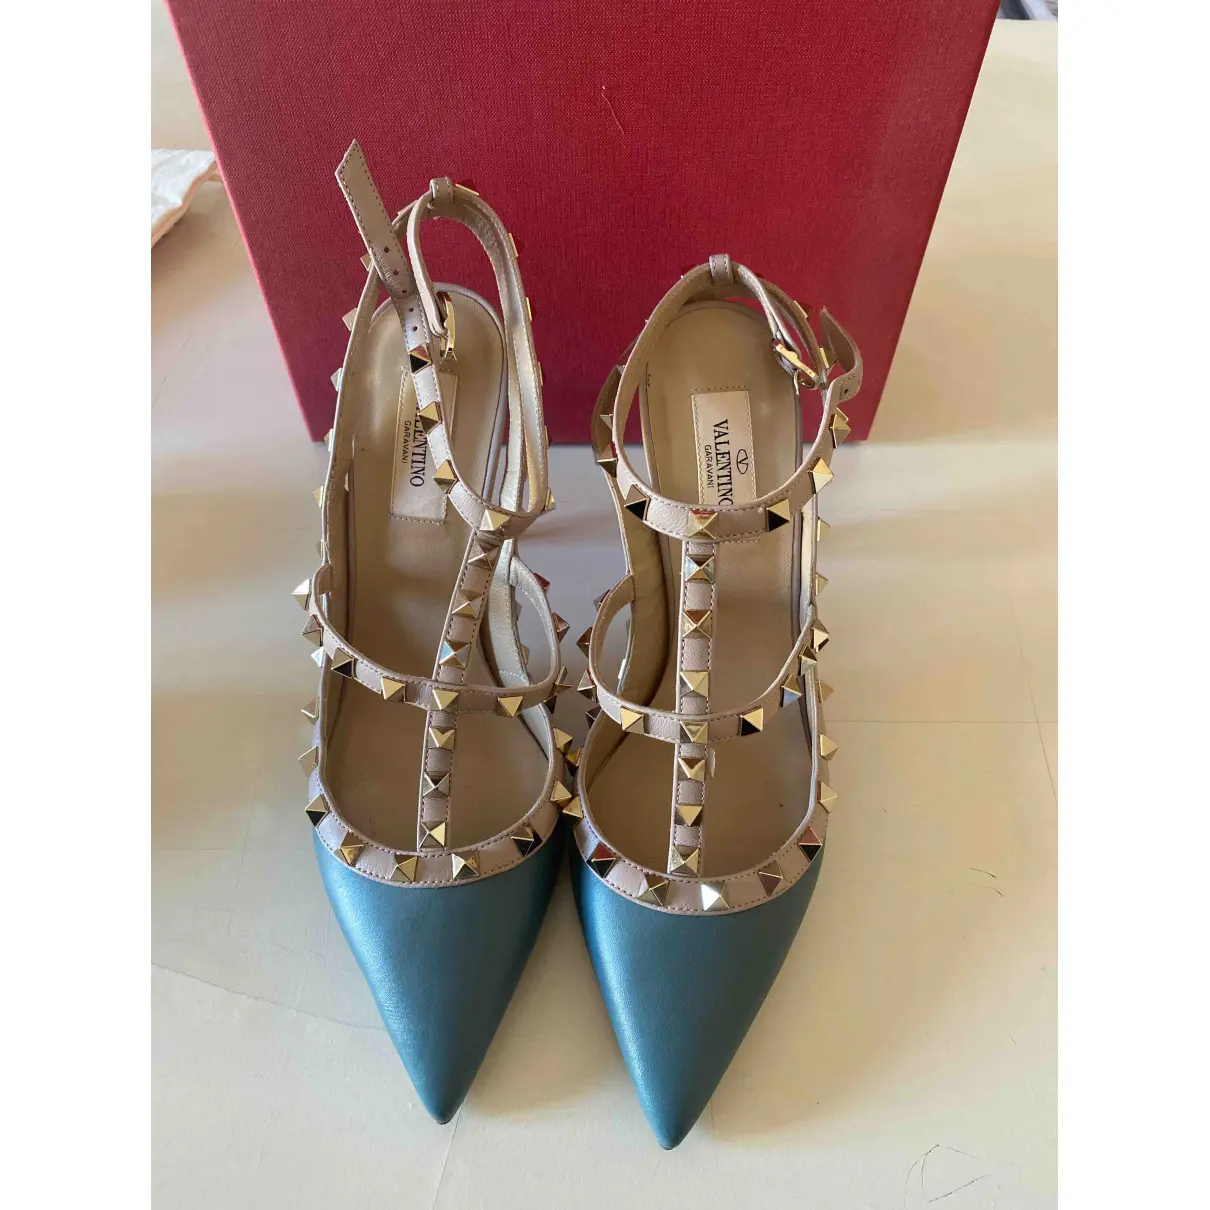 Buy Valentino Garavani Rockstud leather heels online